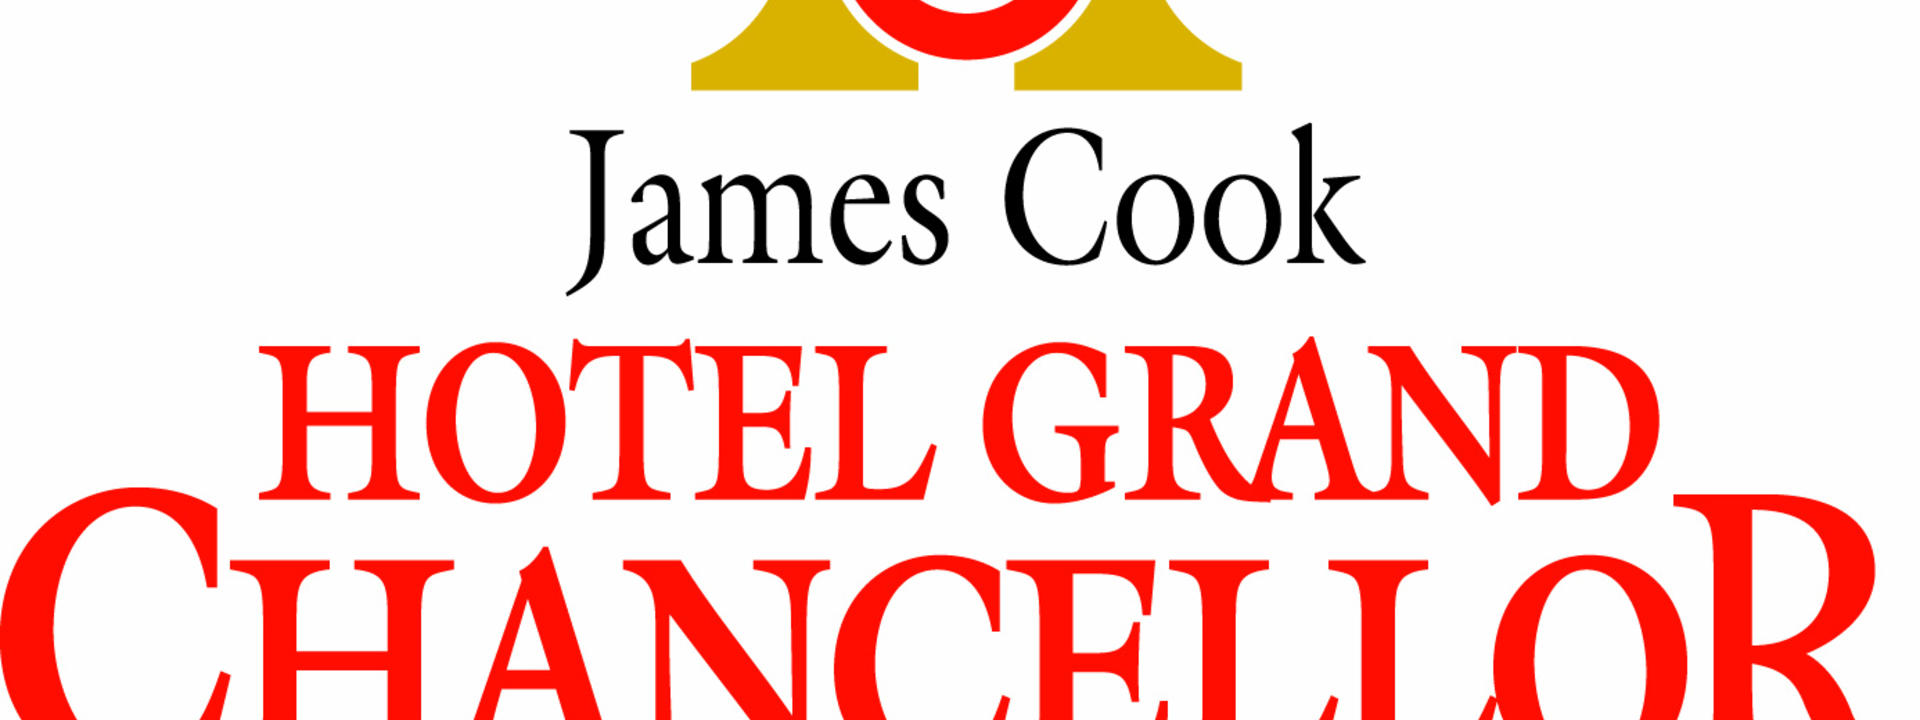 james-cook-logo.jpg